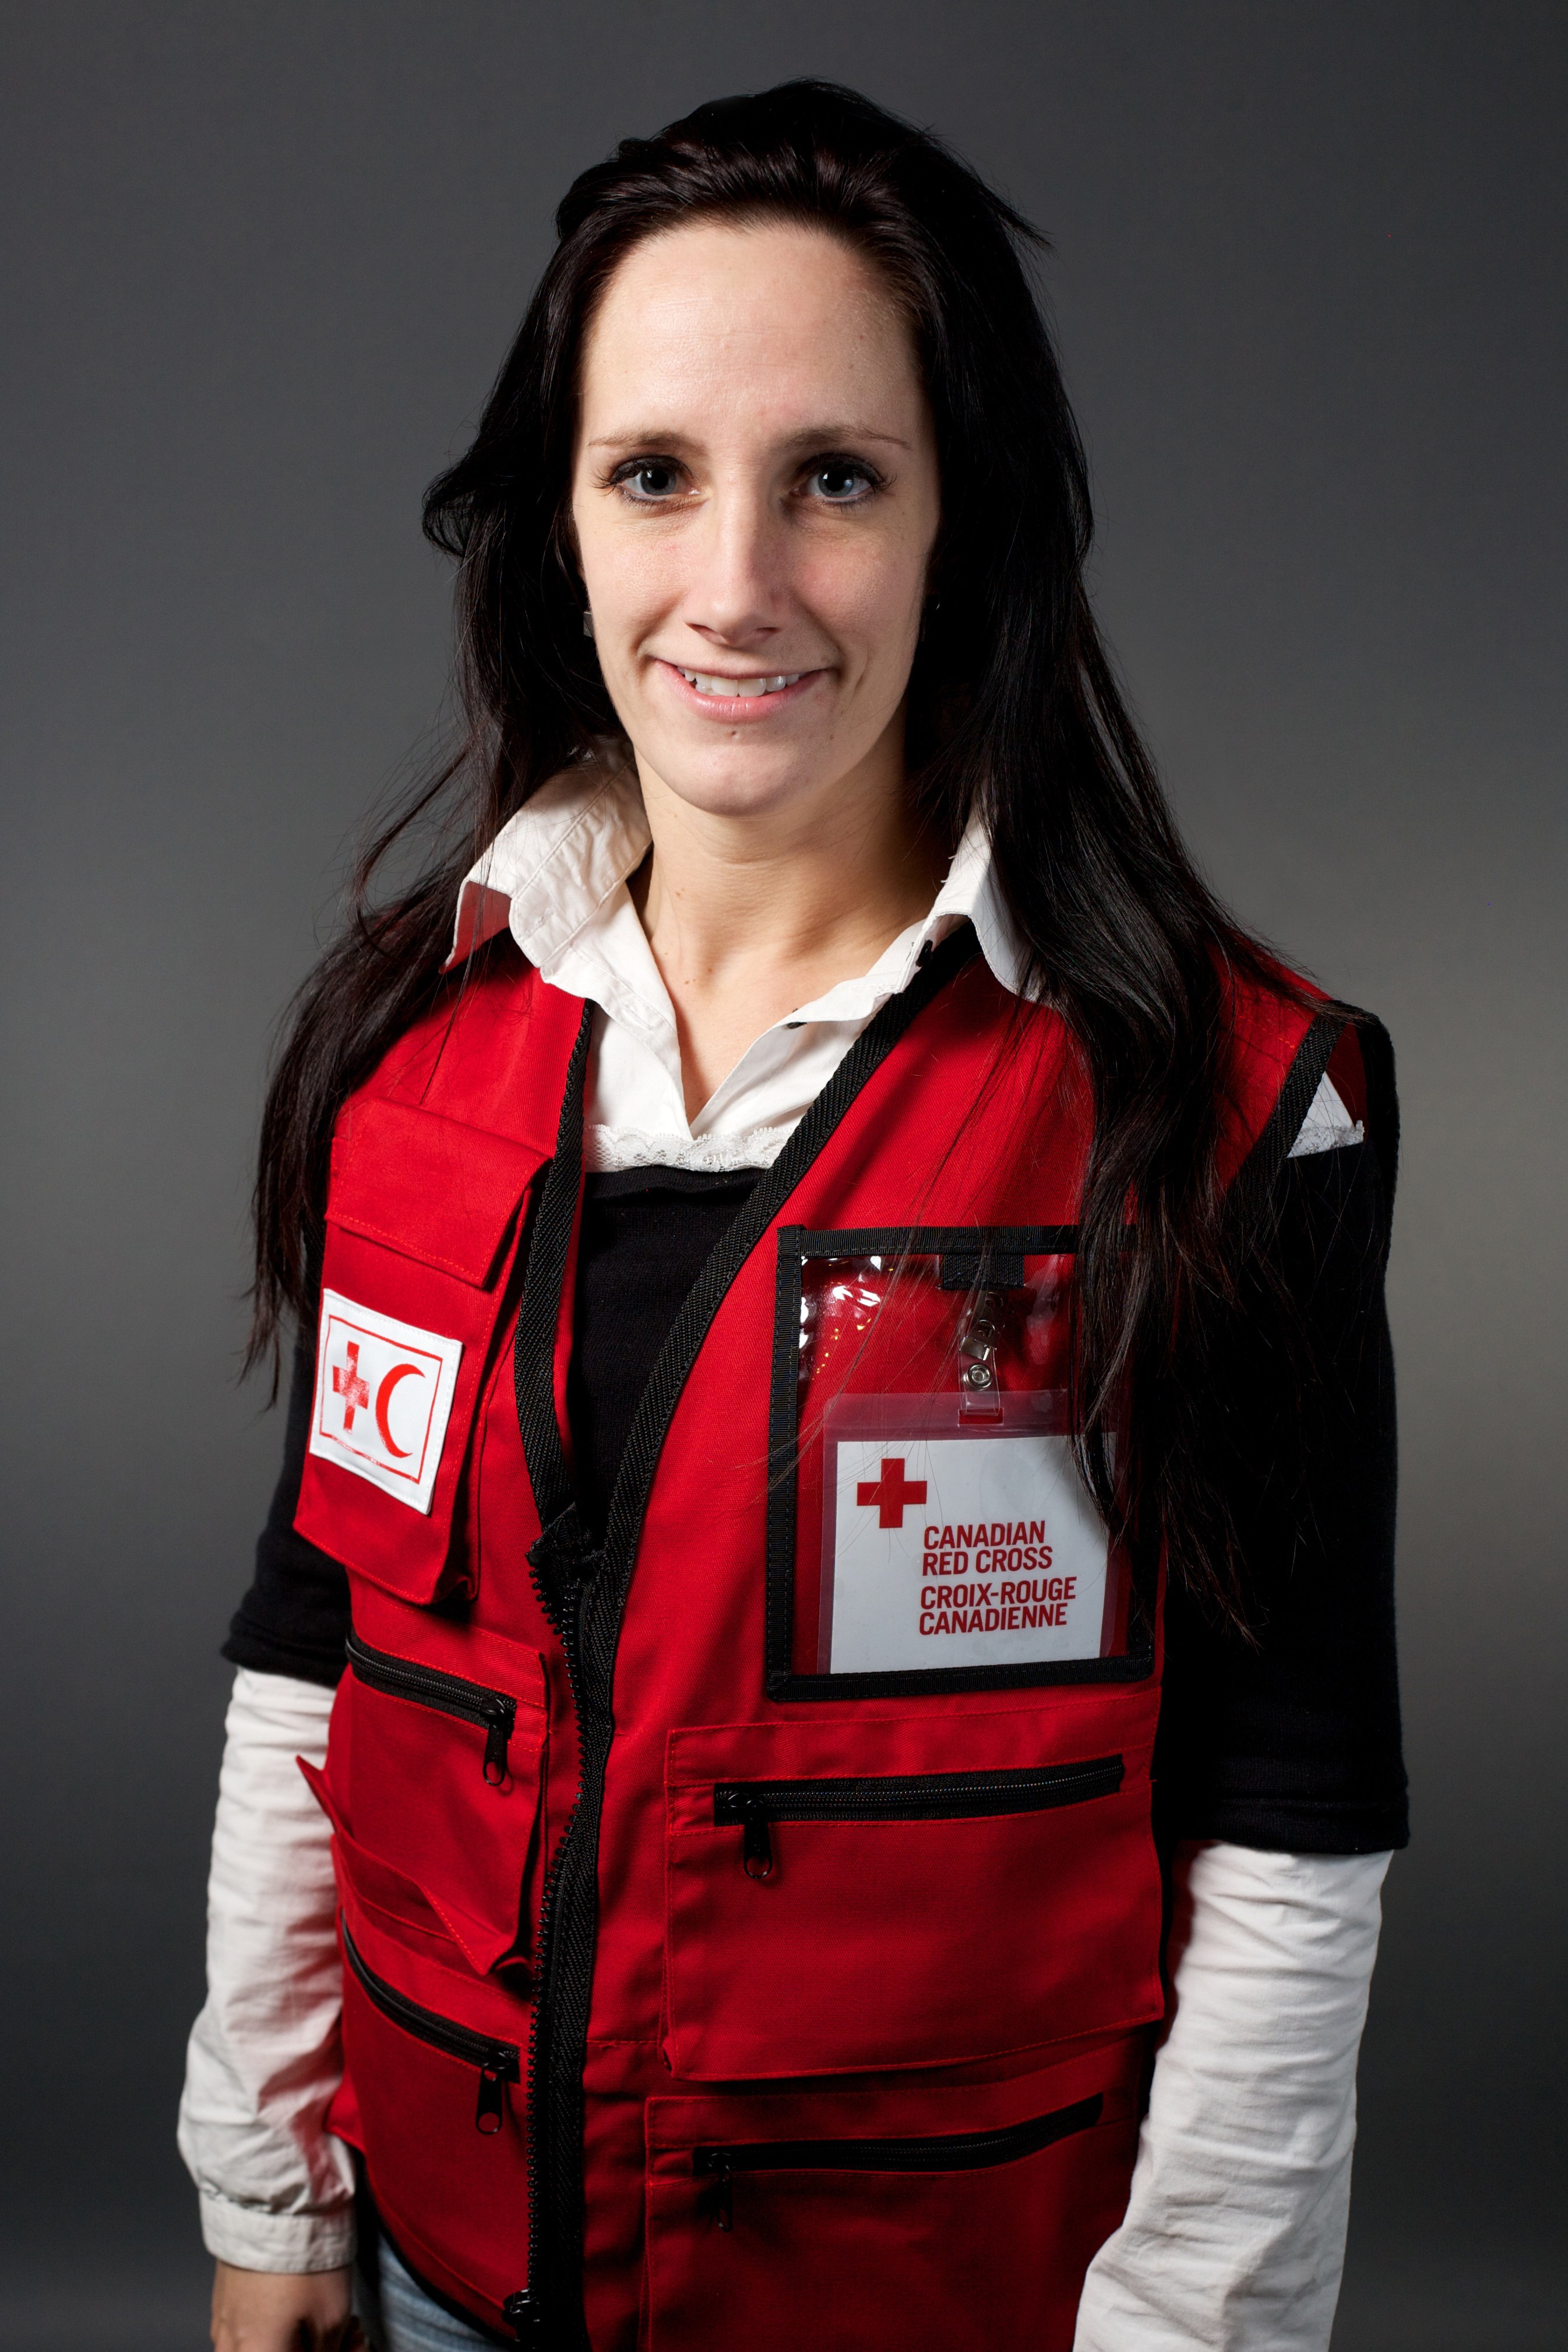 Red Cross numbered Nurse